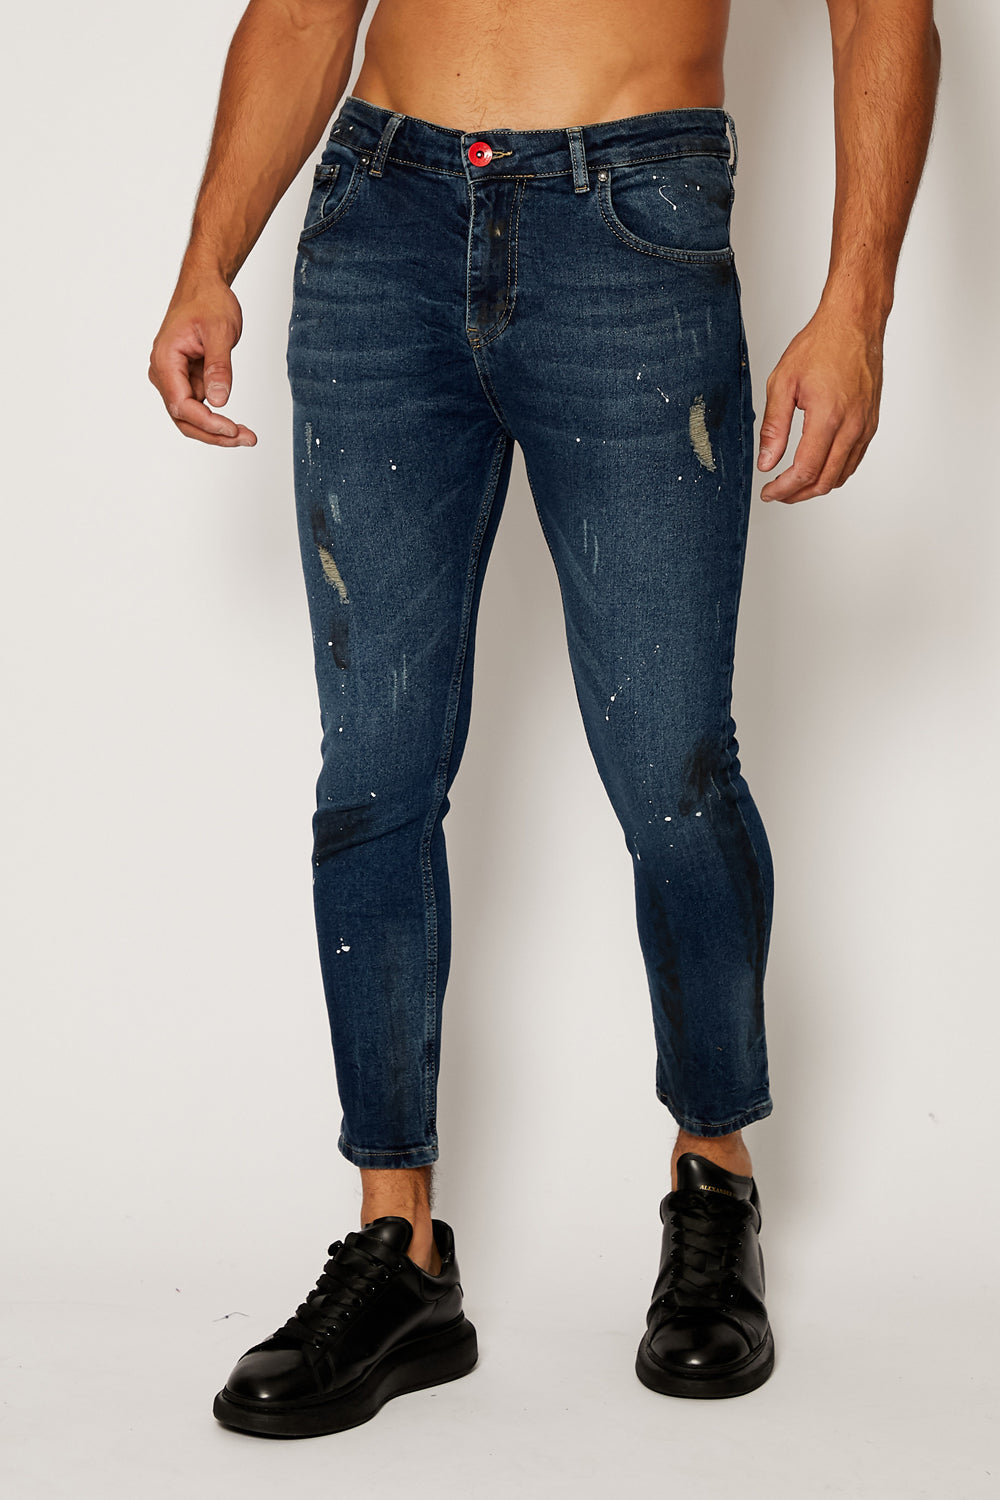 Camedon Road Skinny Jeans - Dark Blue product